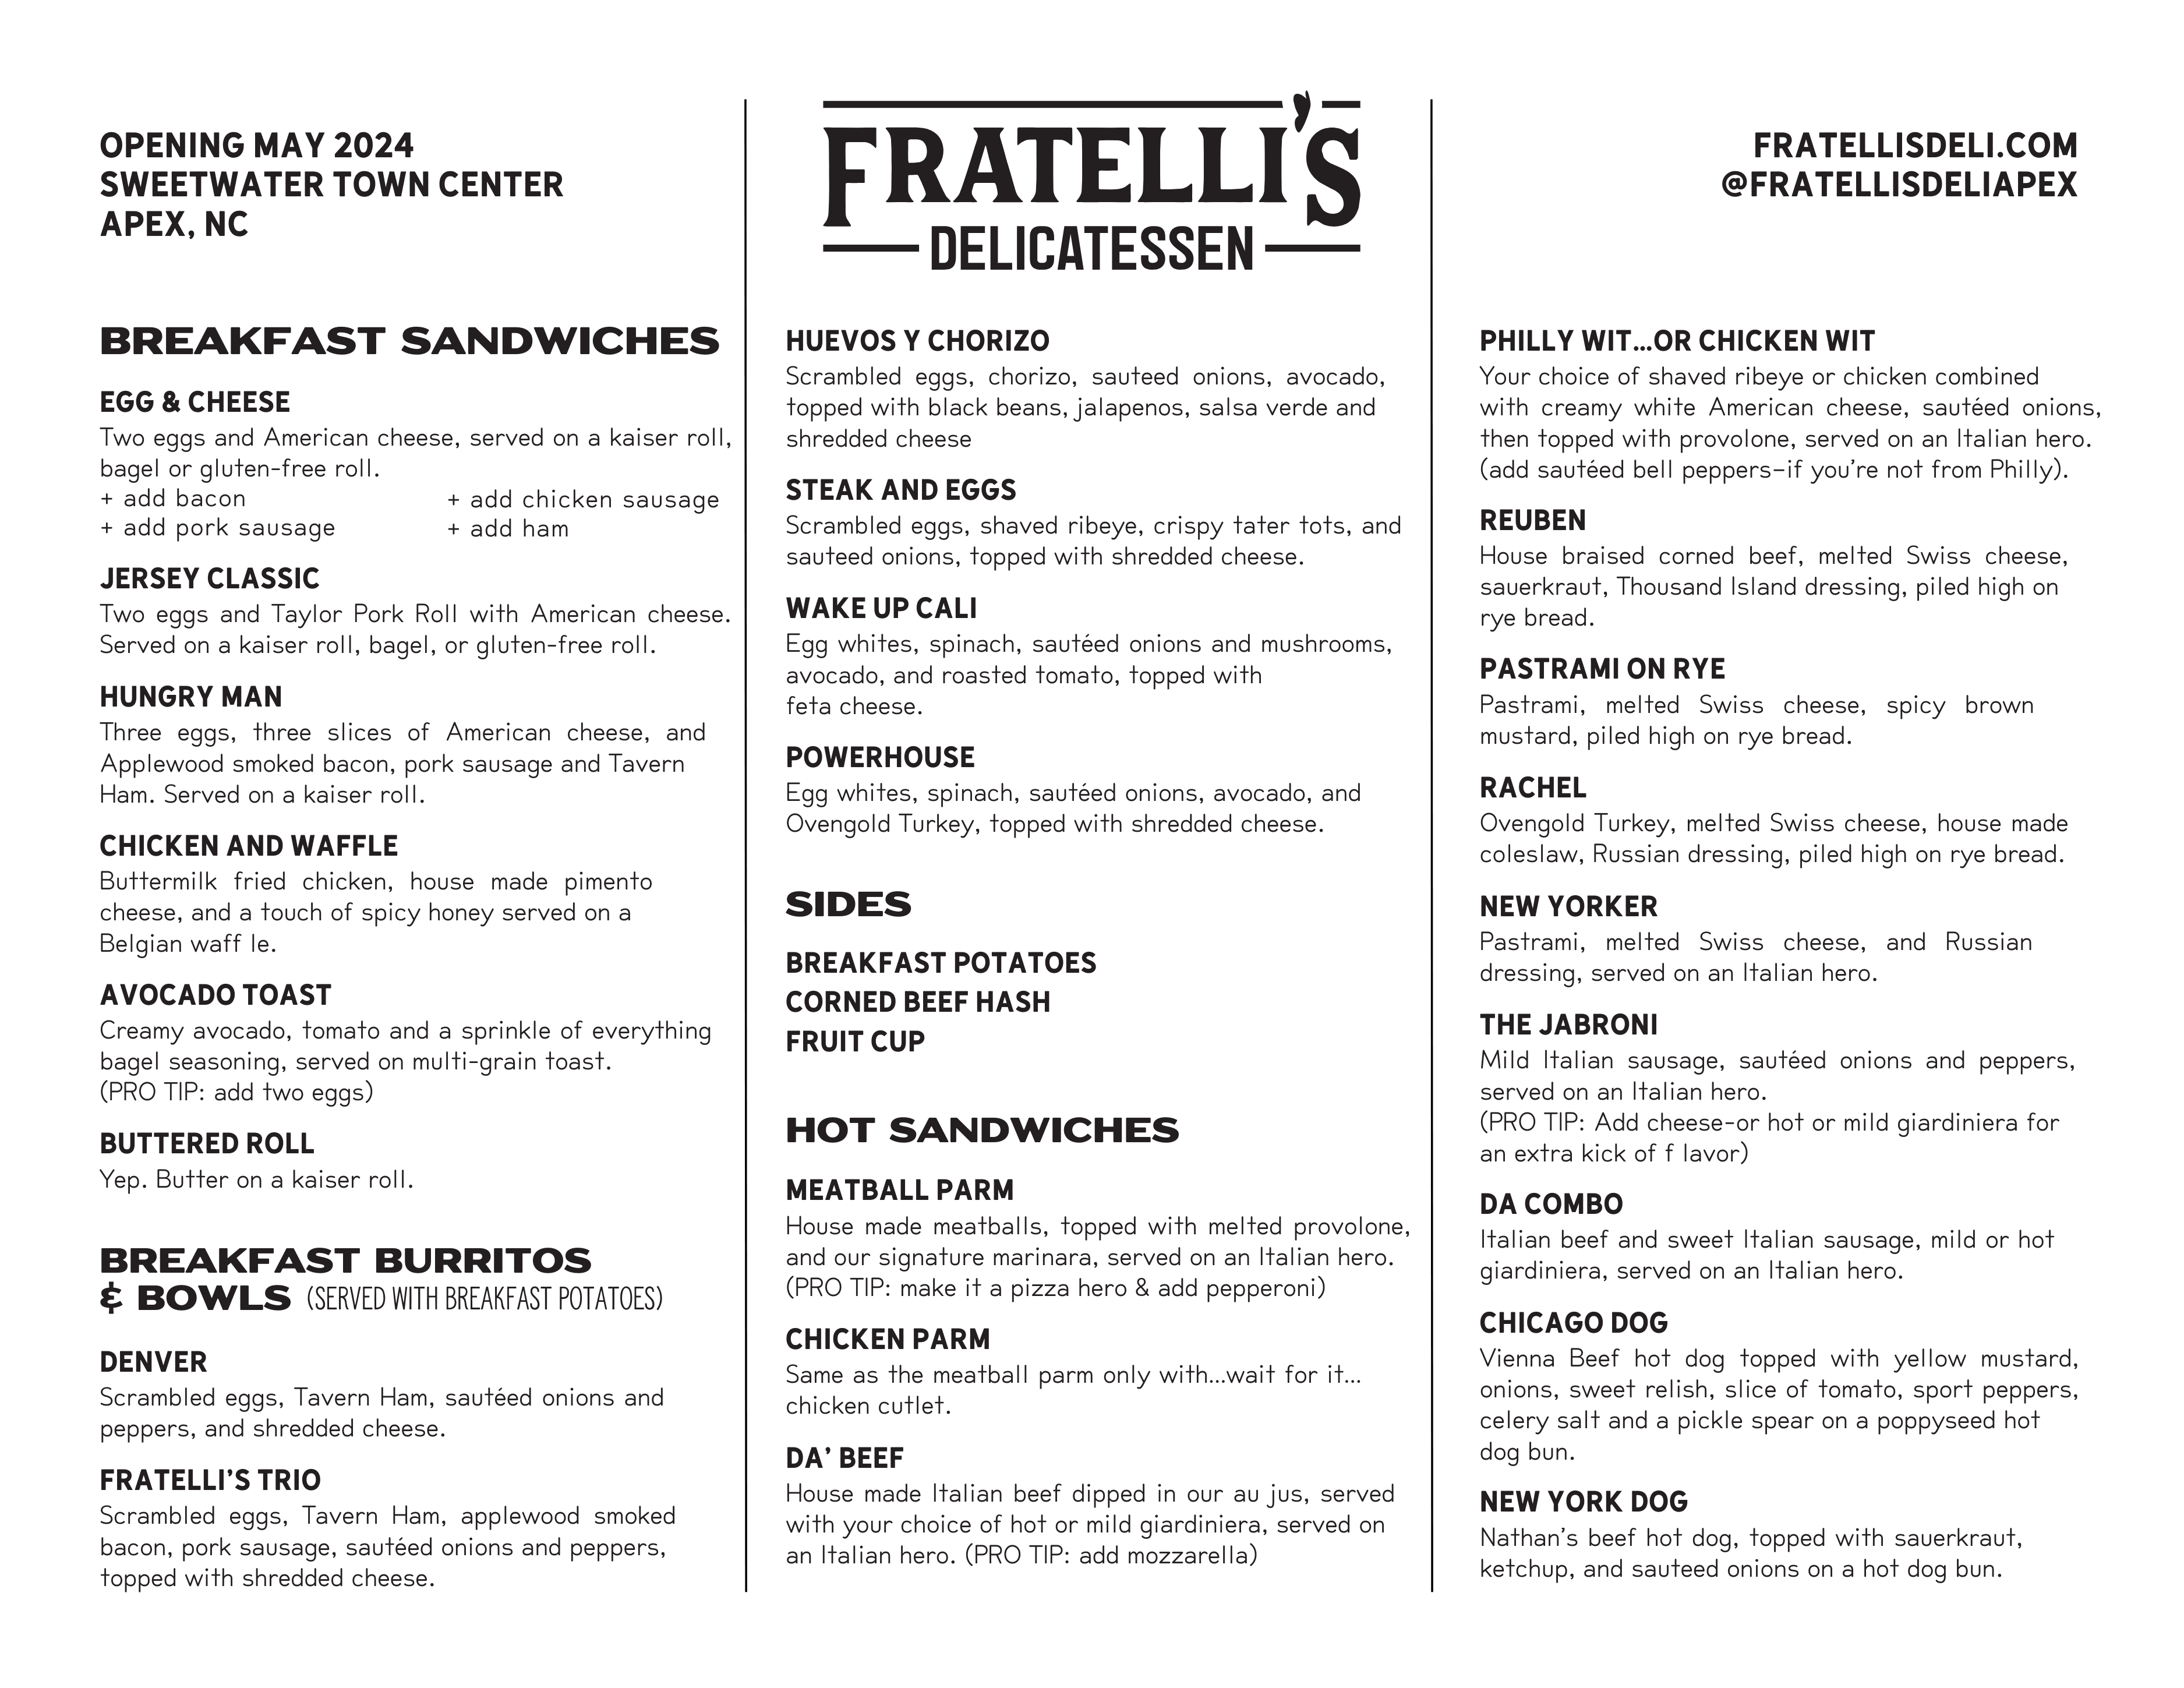 Fratelli's menu page 1